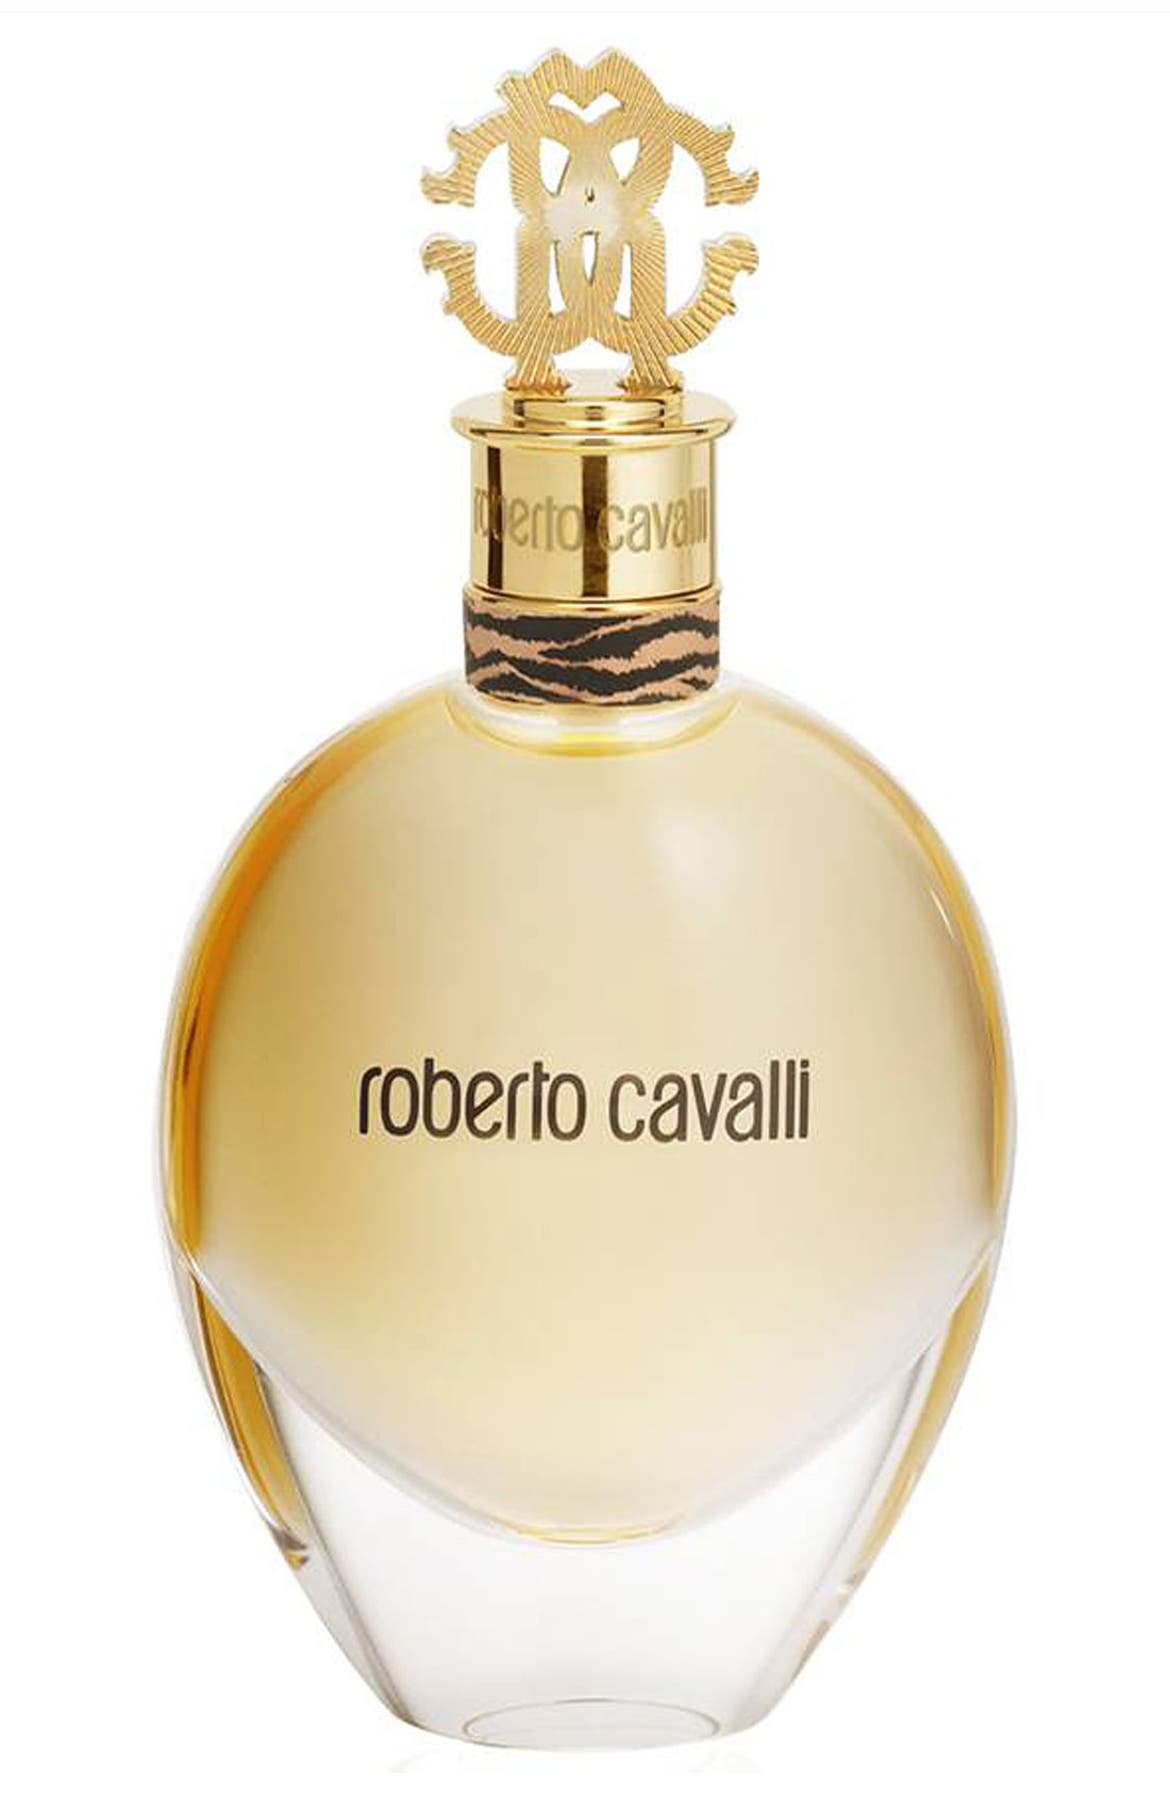 Roberto Cavalli Eau de Parfum | Nordstrom